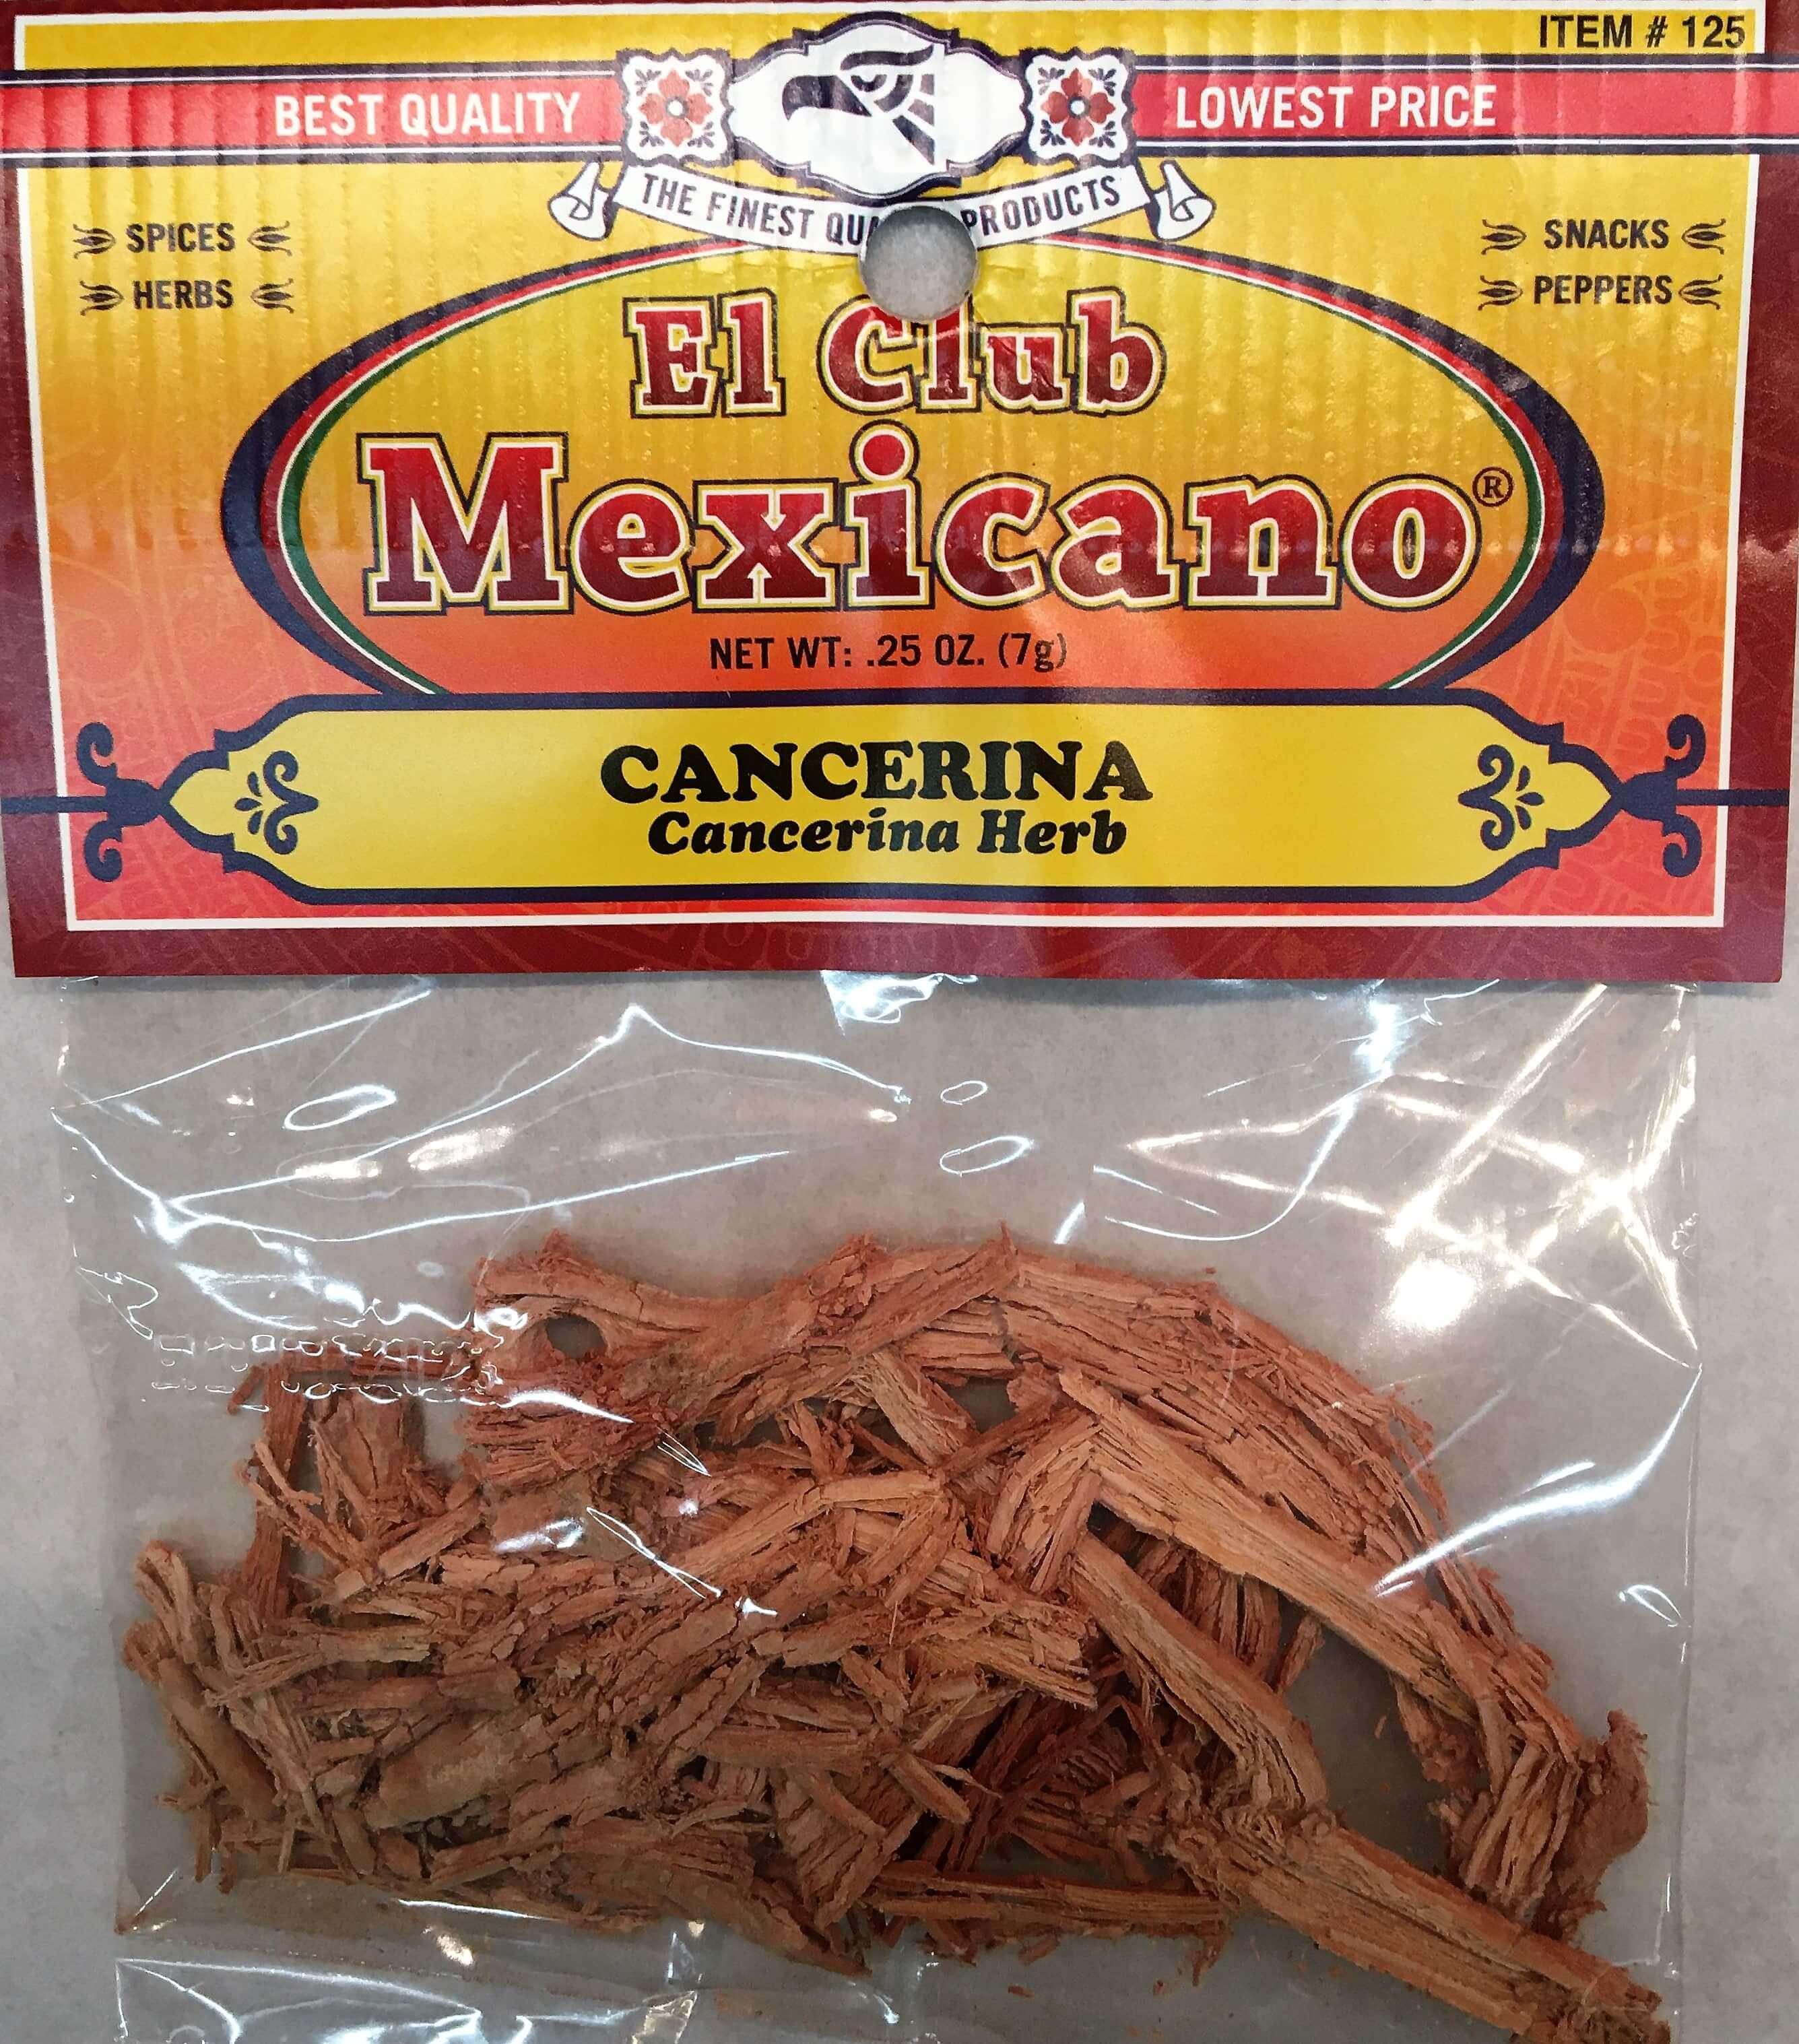 El Club Mexicano - Cancerina Herb 0.25 oz.